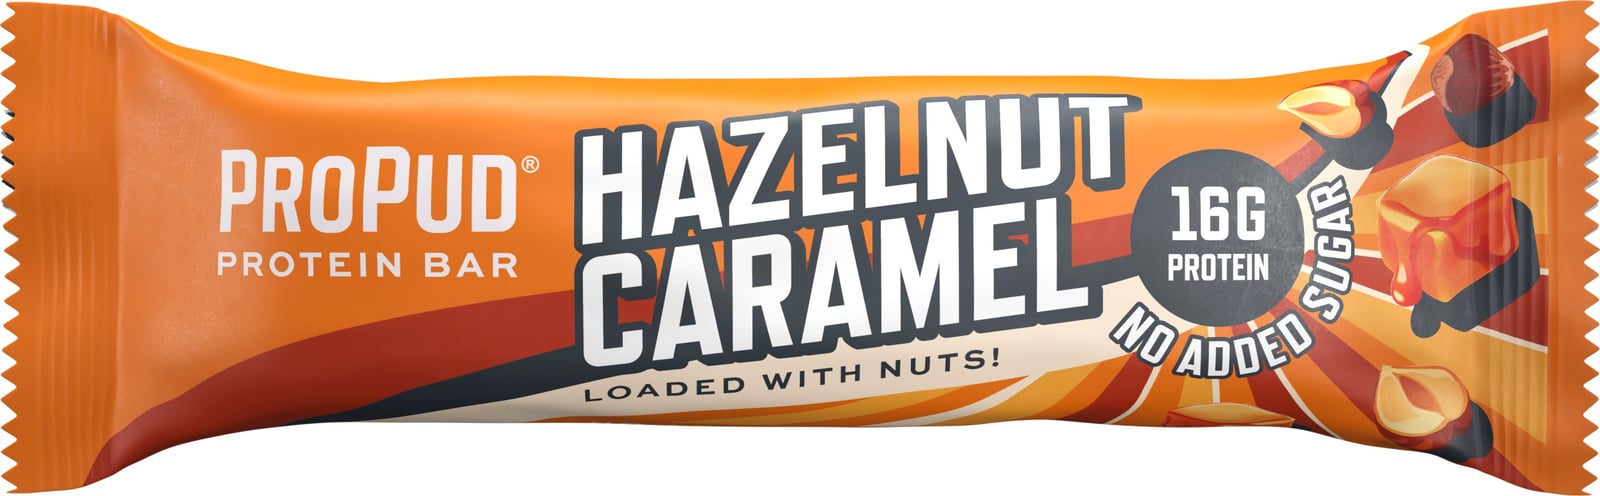 ProPud Protein Bar Hazelnut Caramel 55 g